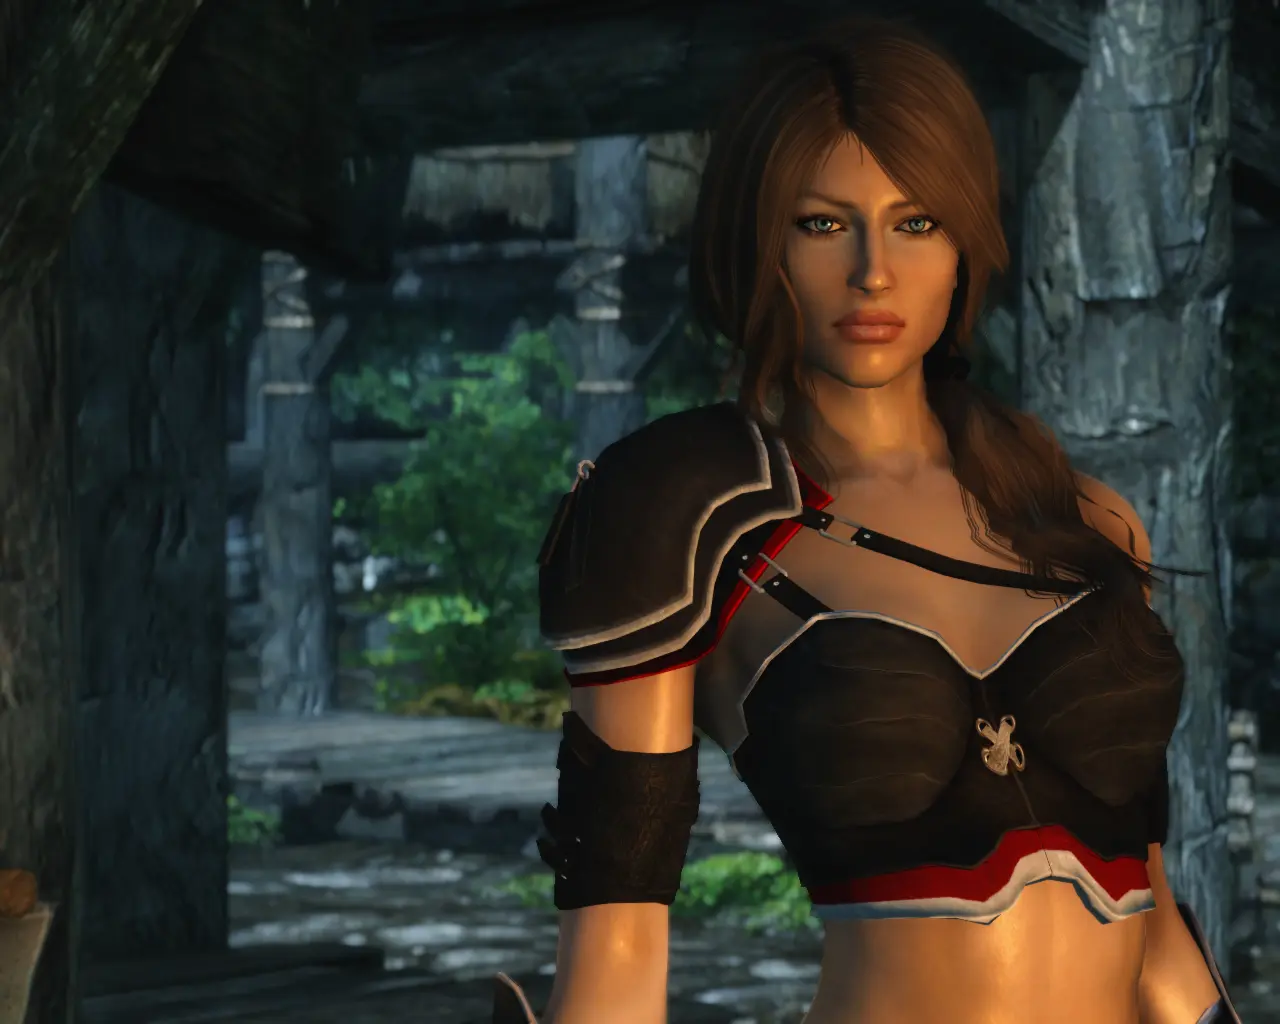 Mycharacter Temptress Race Lara And Enbseries And Directortools Shader Effect At Skyrim Nexus